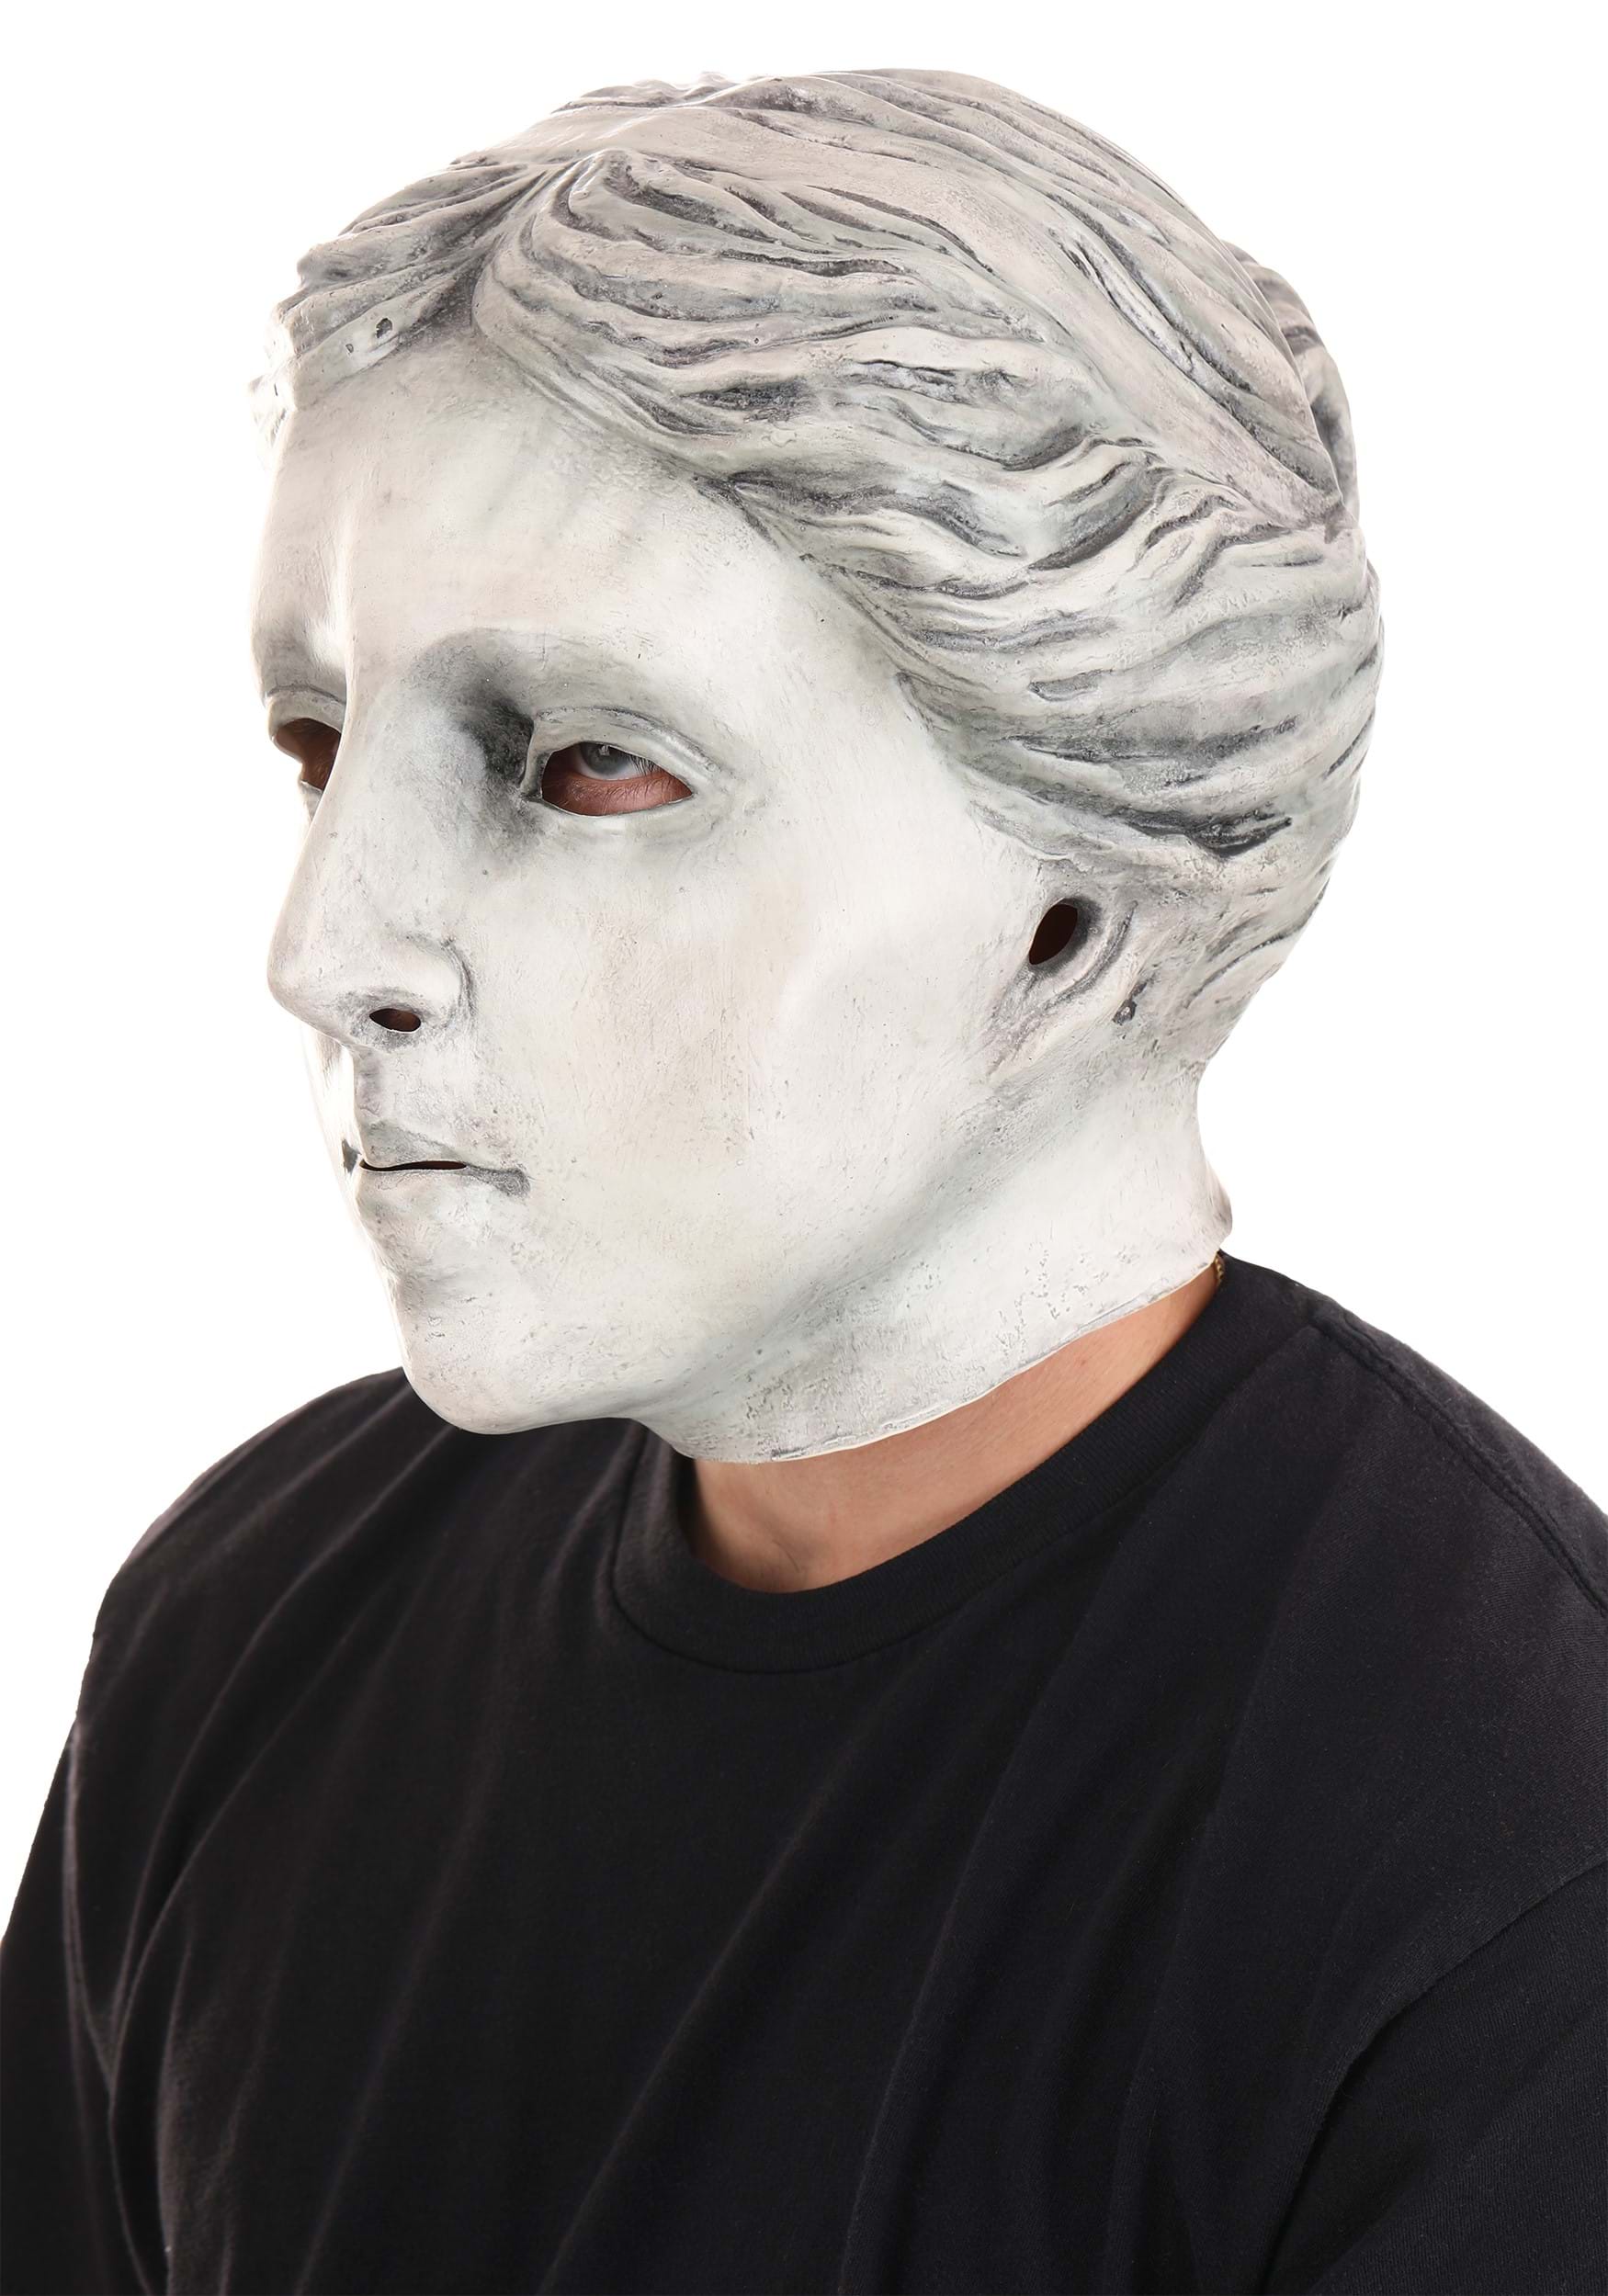 Scary Sullen Statue Mask